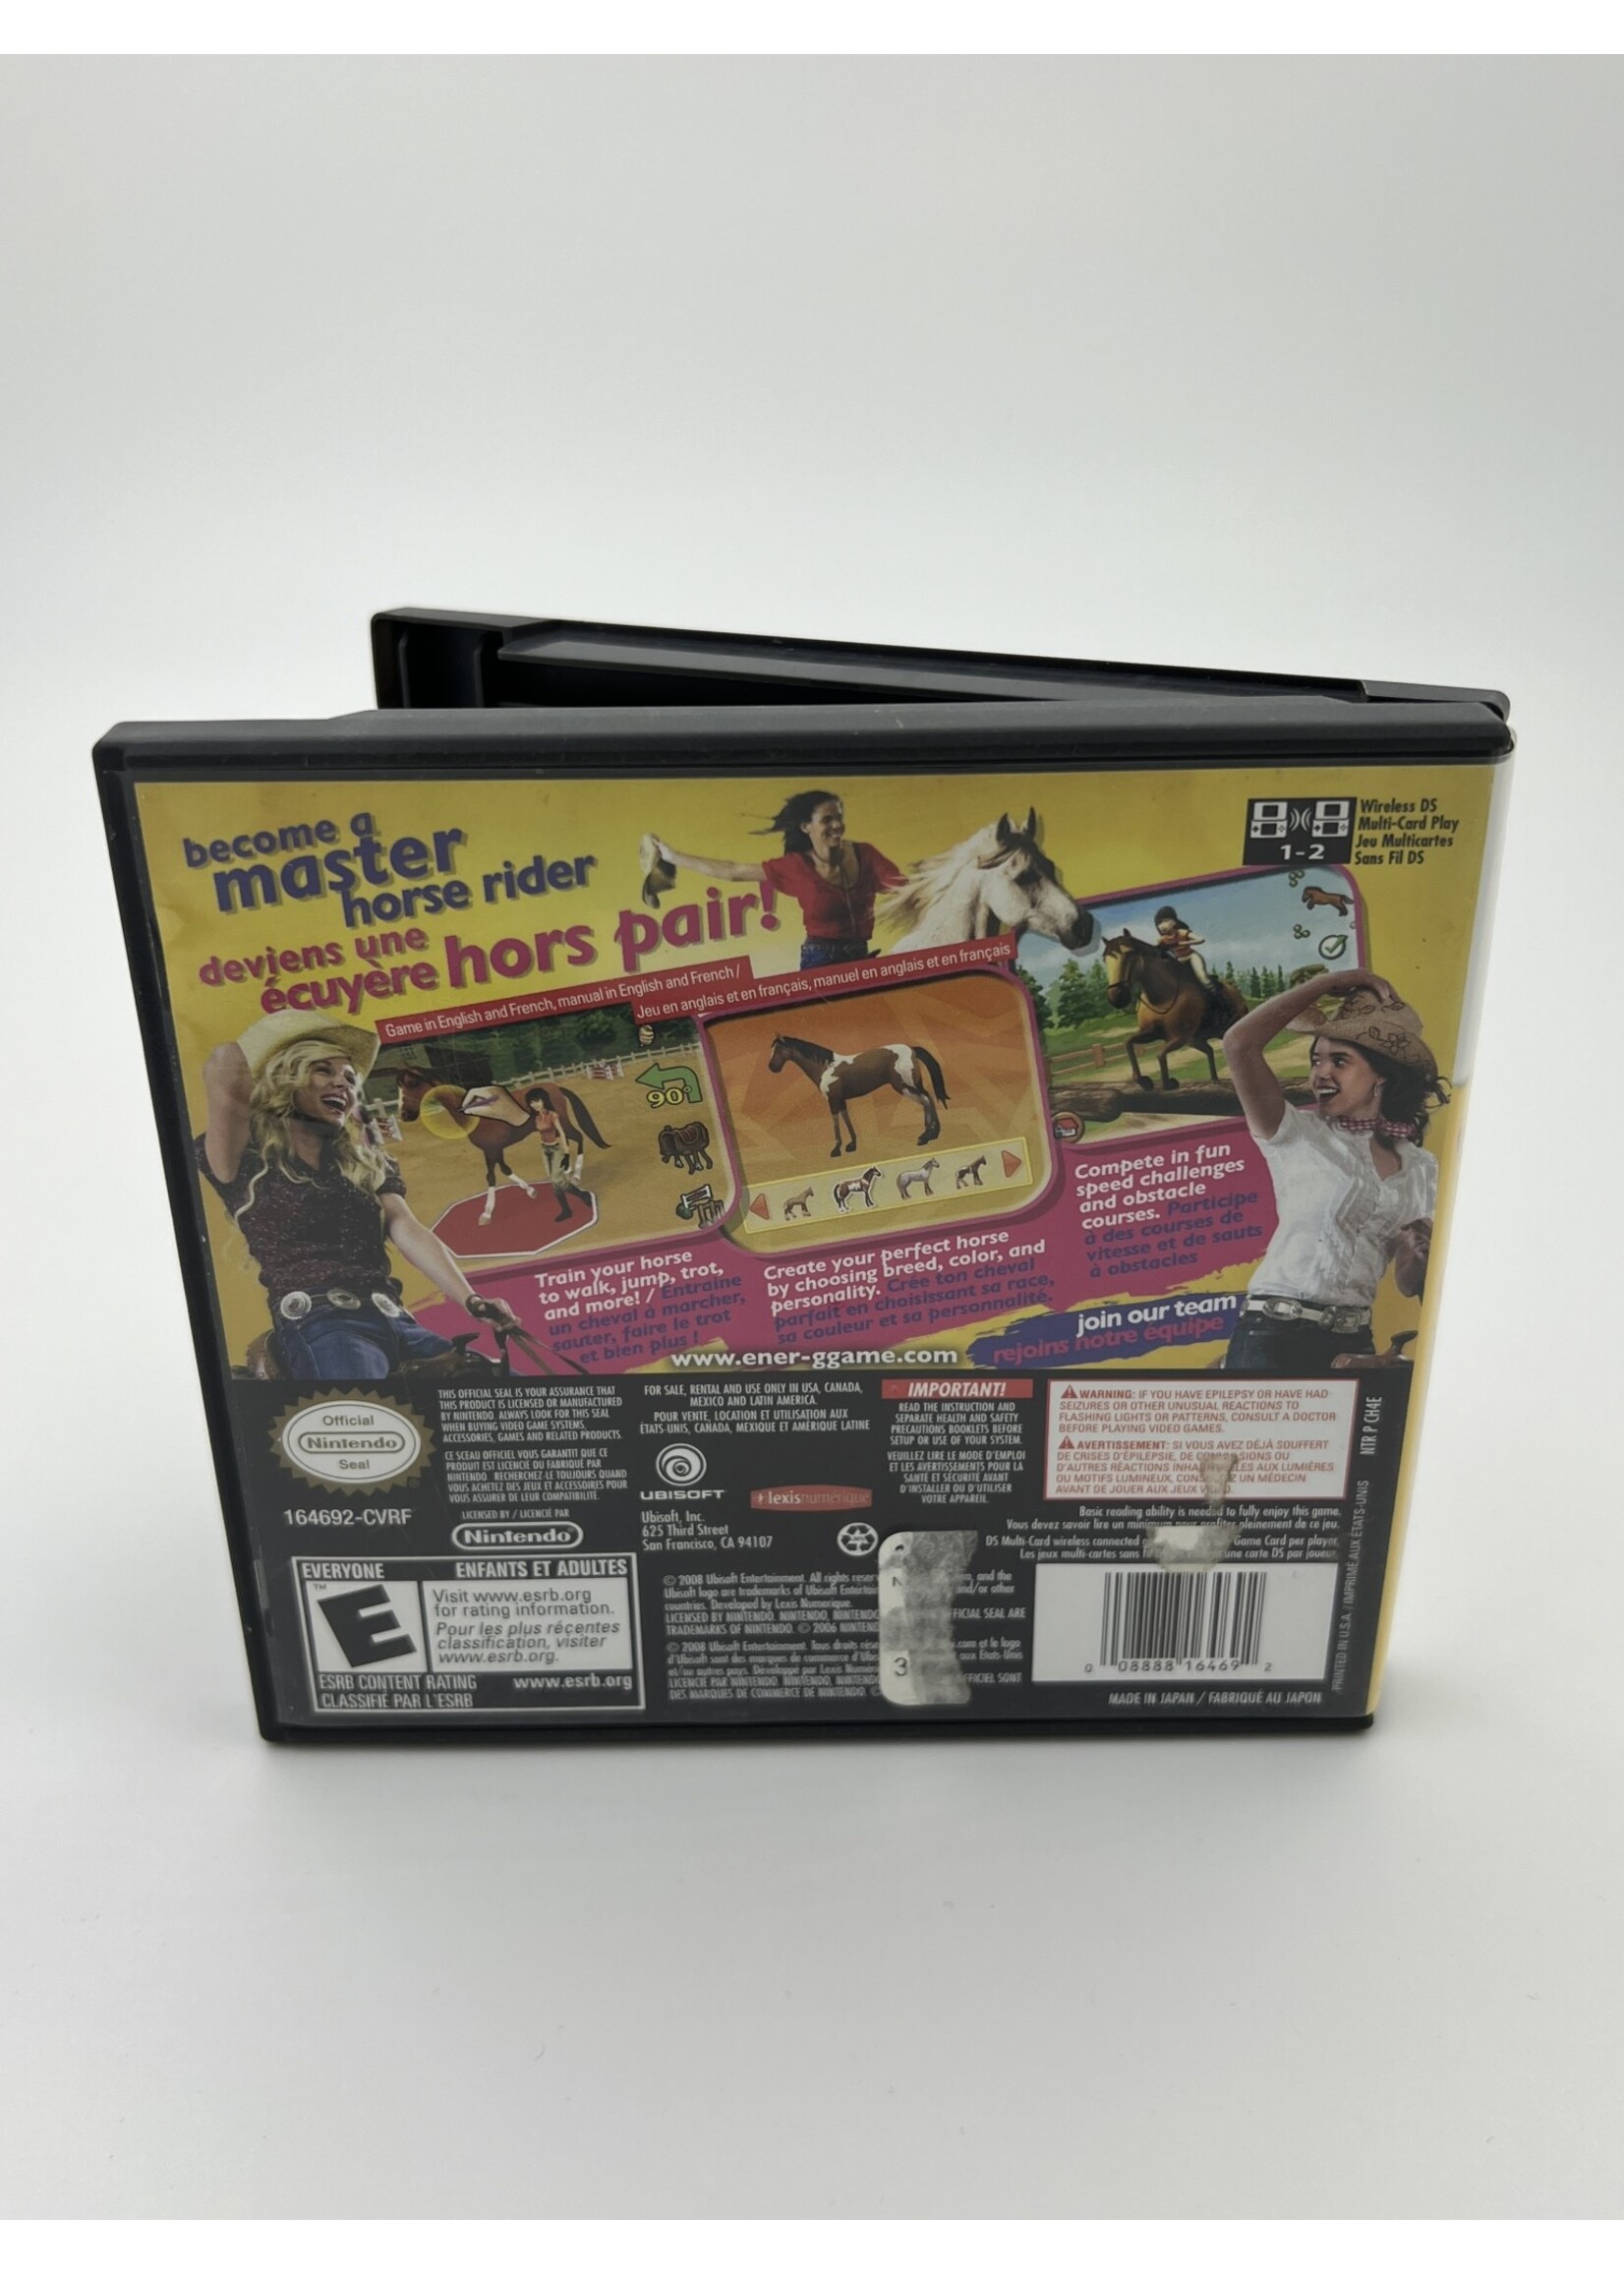 Nintendo Ener-G: Horse Riders - DS